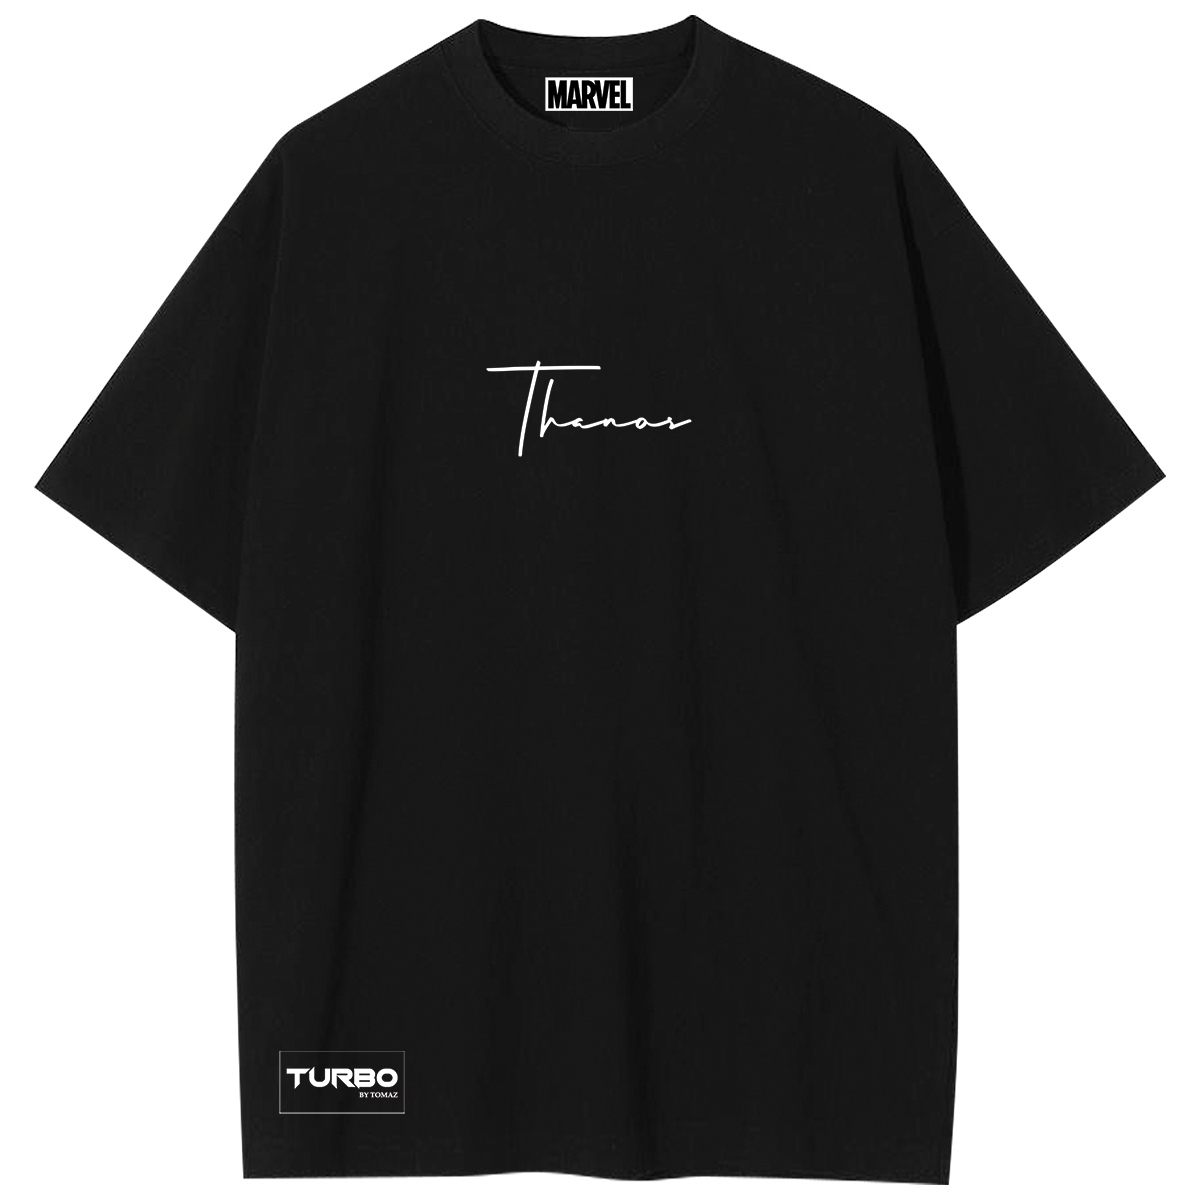 Turbo Thanos CC-1272 Over-sized T-shirt (Gold/Black)